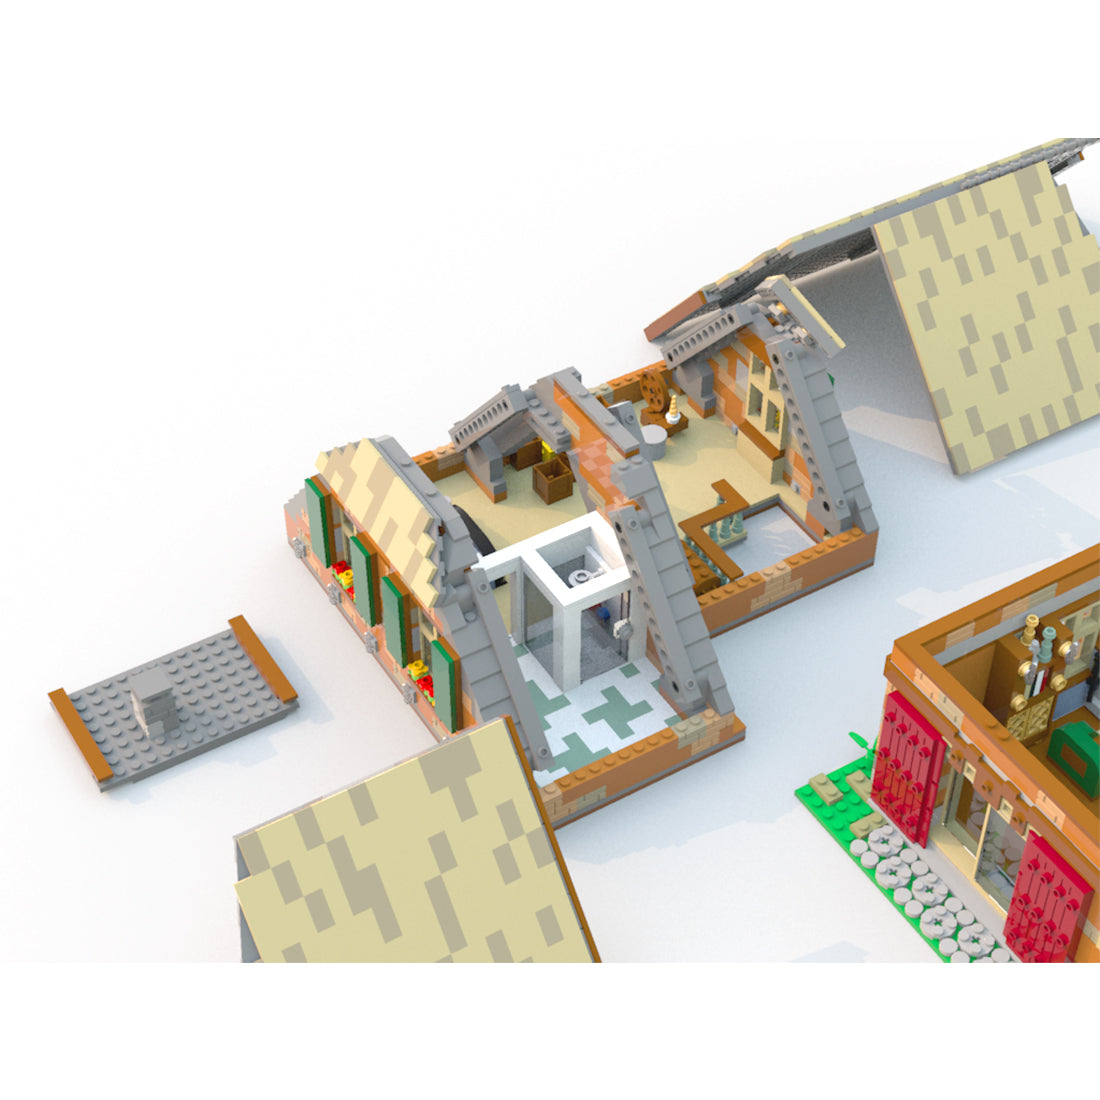 Technic Architecture Rustic Farmhouse Compitable with Lego